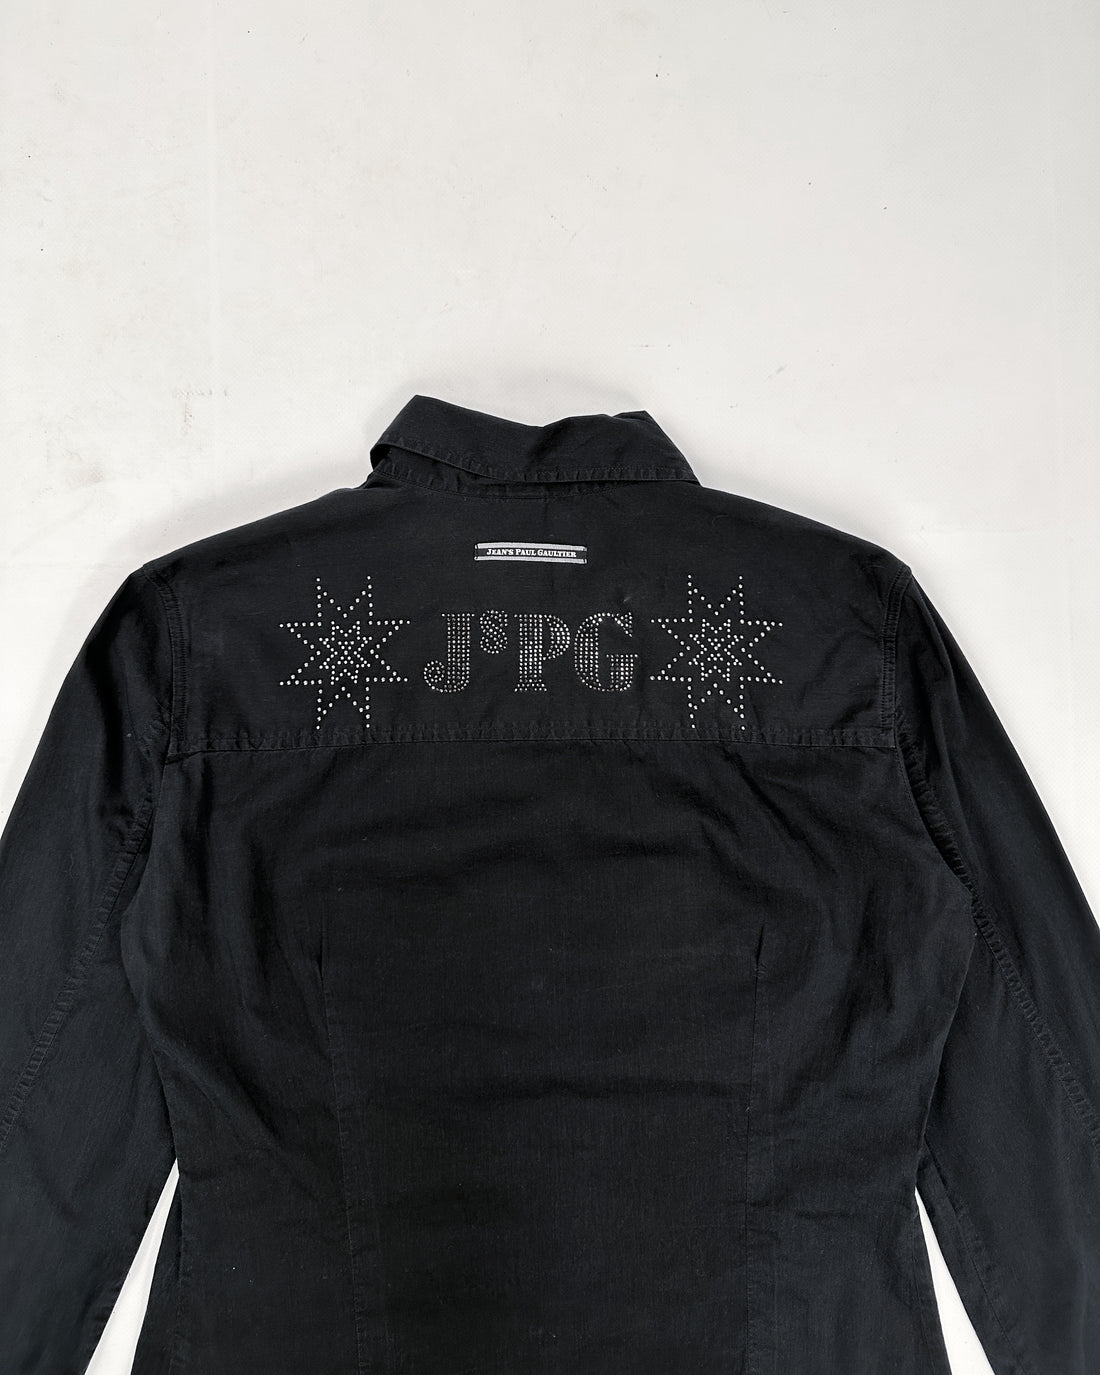 Jean Paul Gaultier Decorated Black Shirt 1990’s